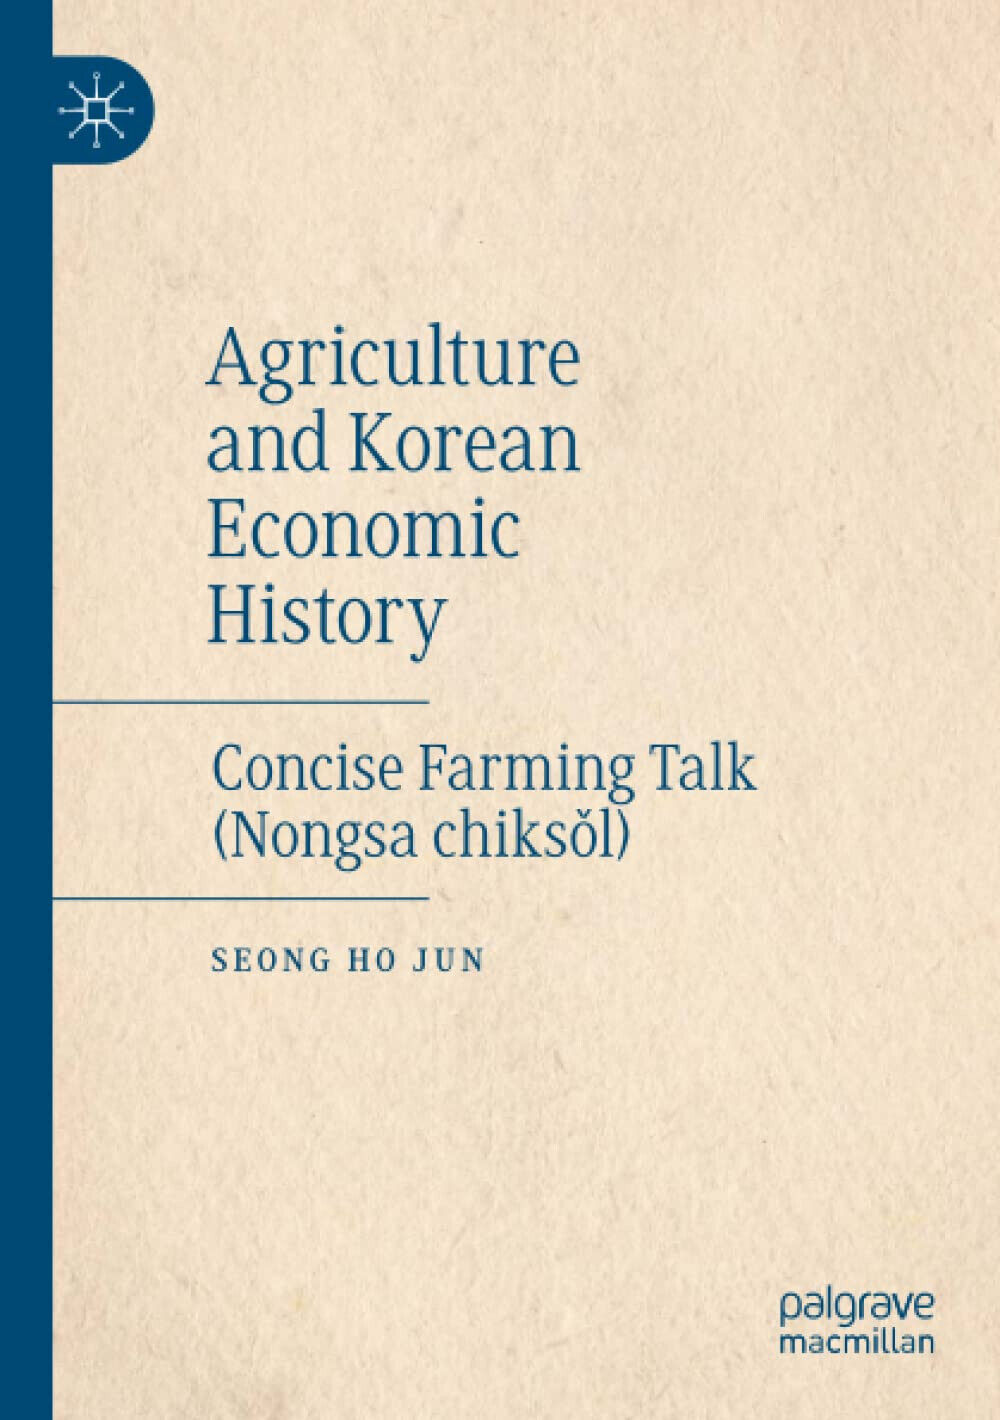 Agriculture and Korean Economic History - Seong Ho Jun - Palgrave, 2020 libro usato